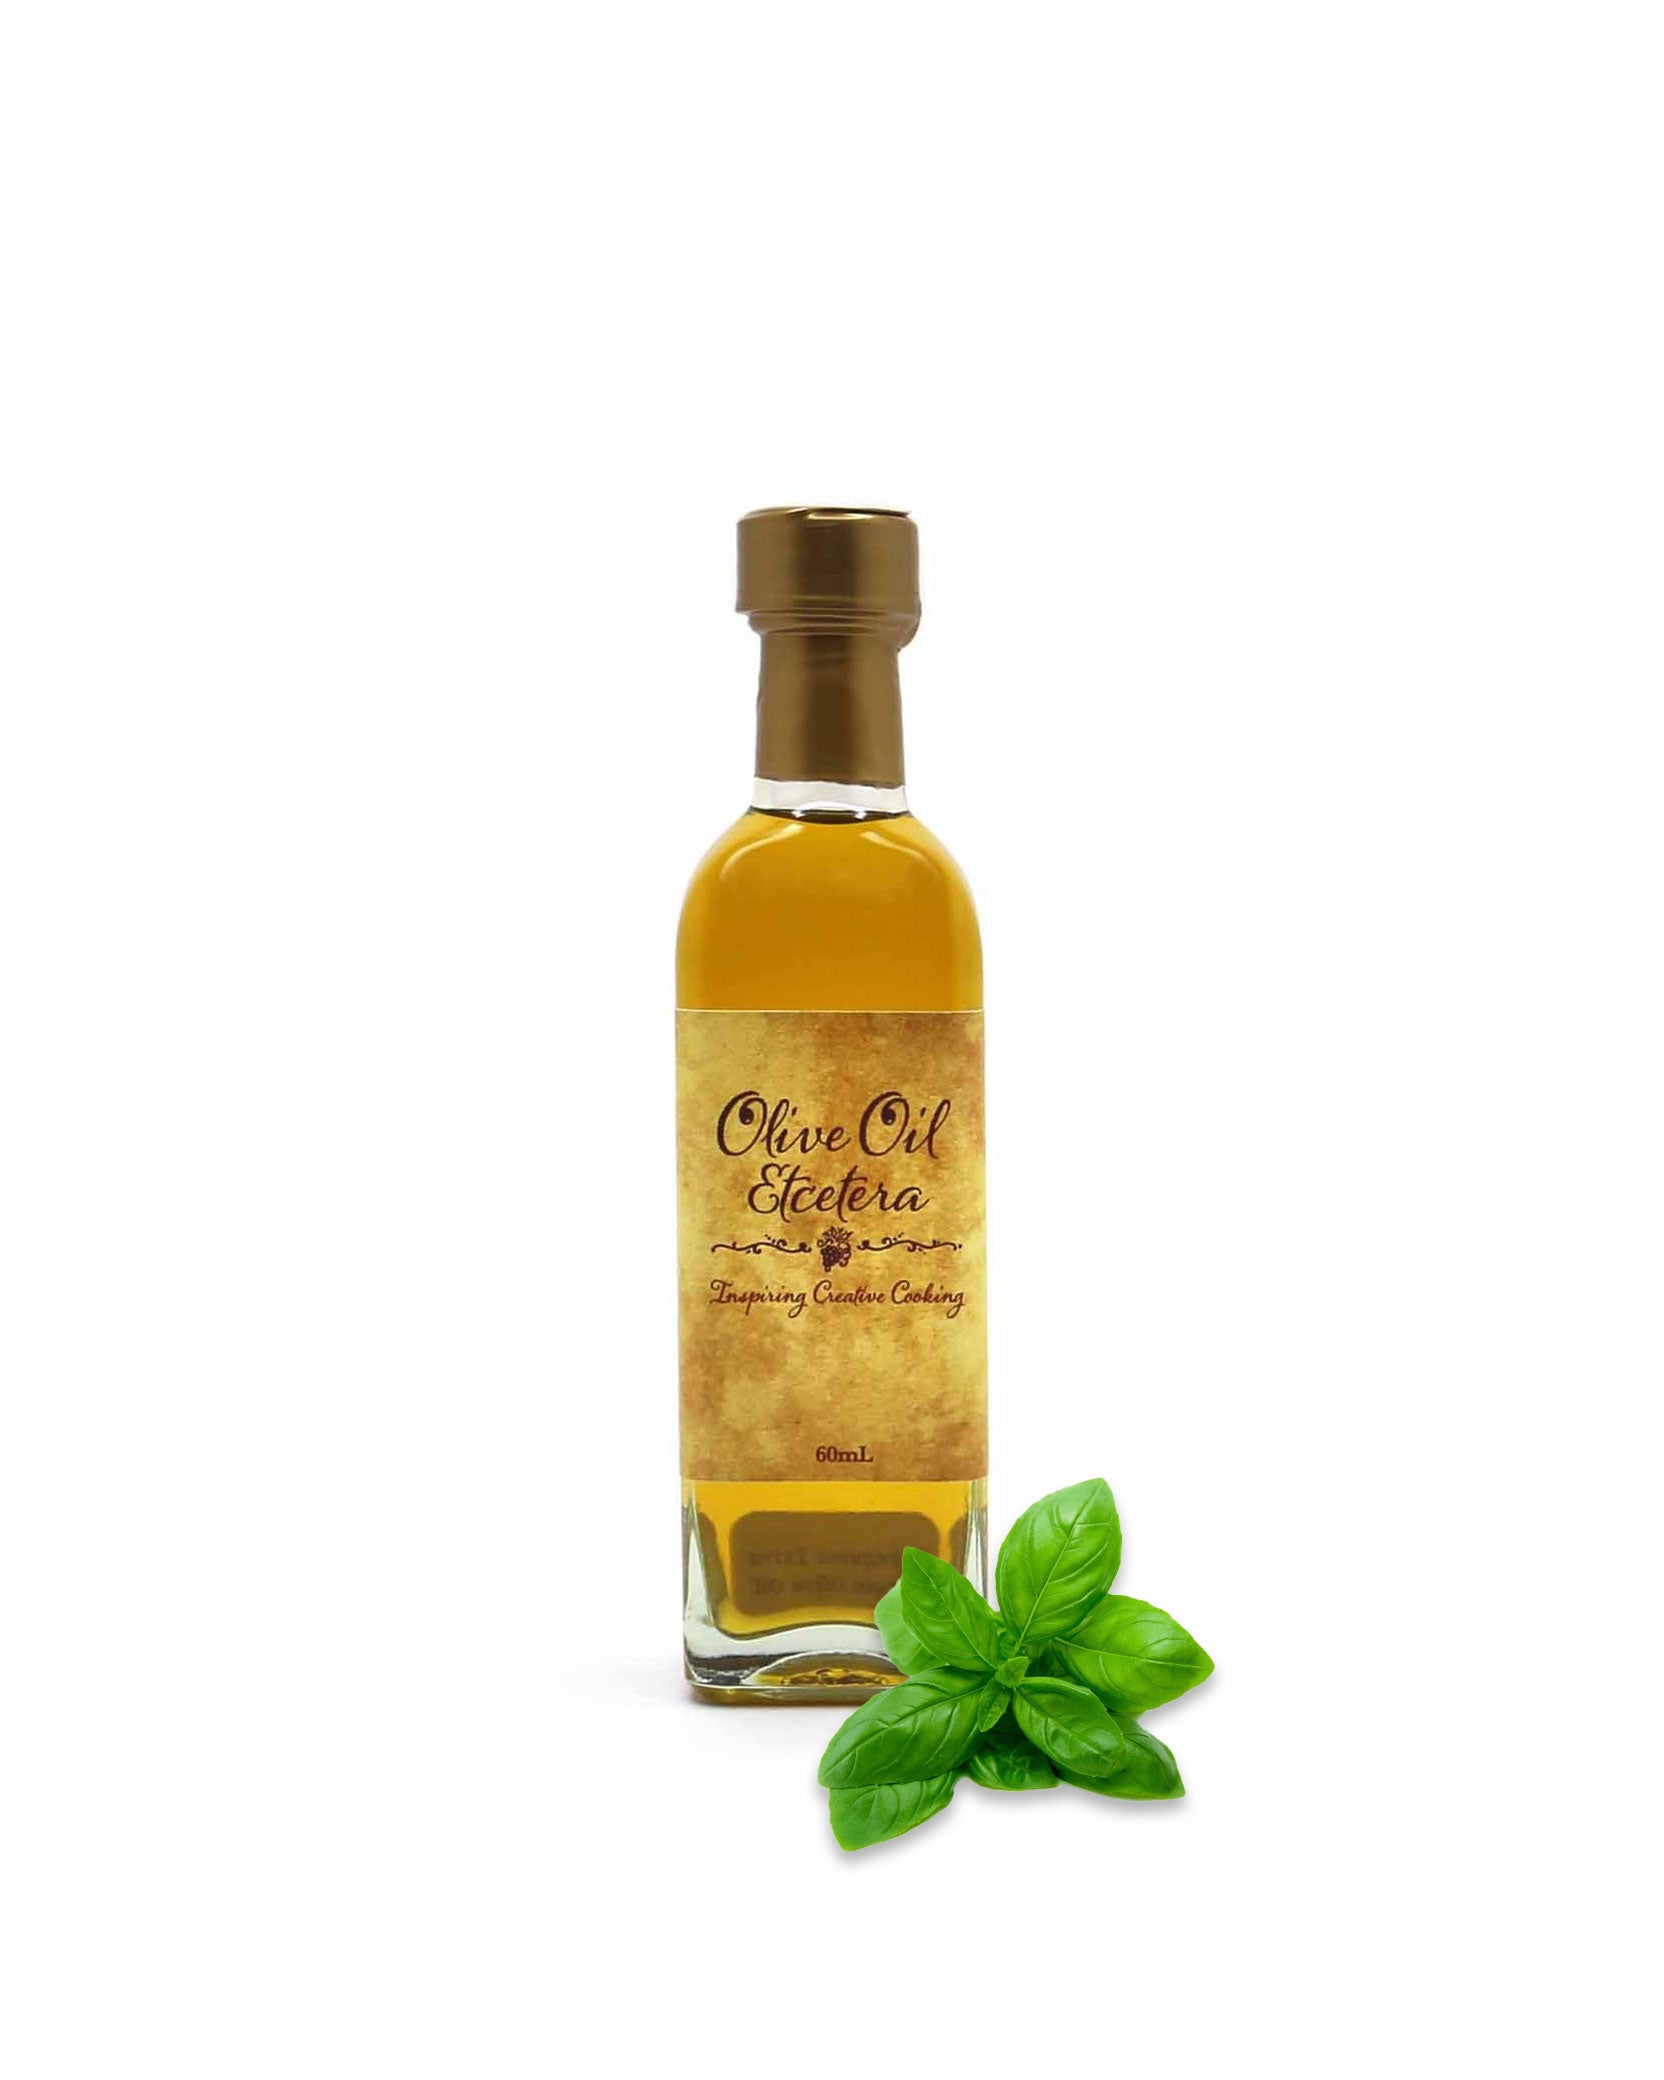 Fresh Basil Olive Oil - Olive Oil Etcetera - Bucks county's gourmet olive oil and vinegar shop